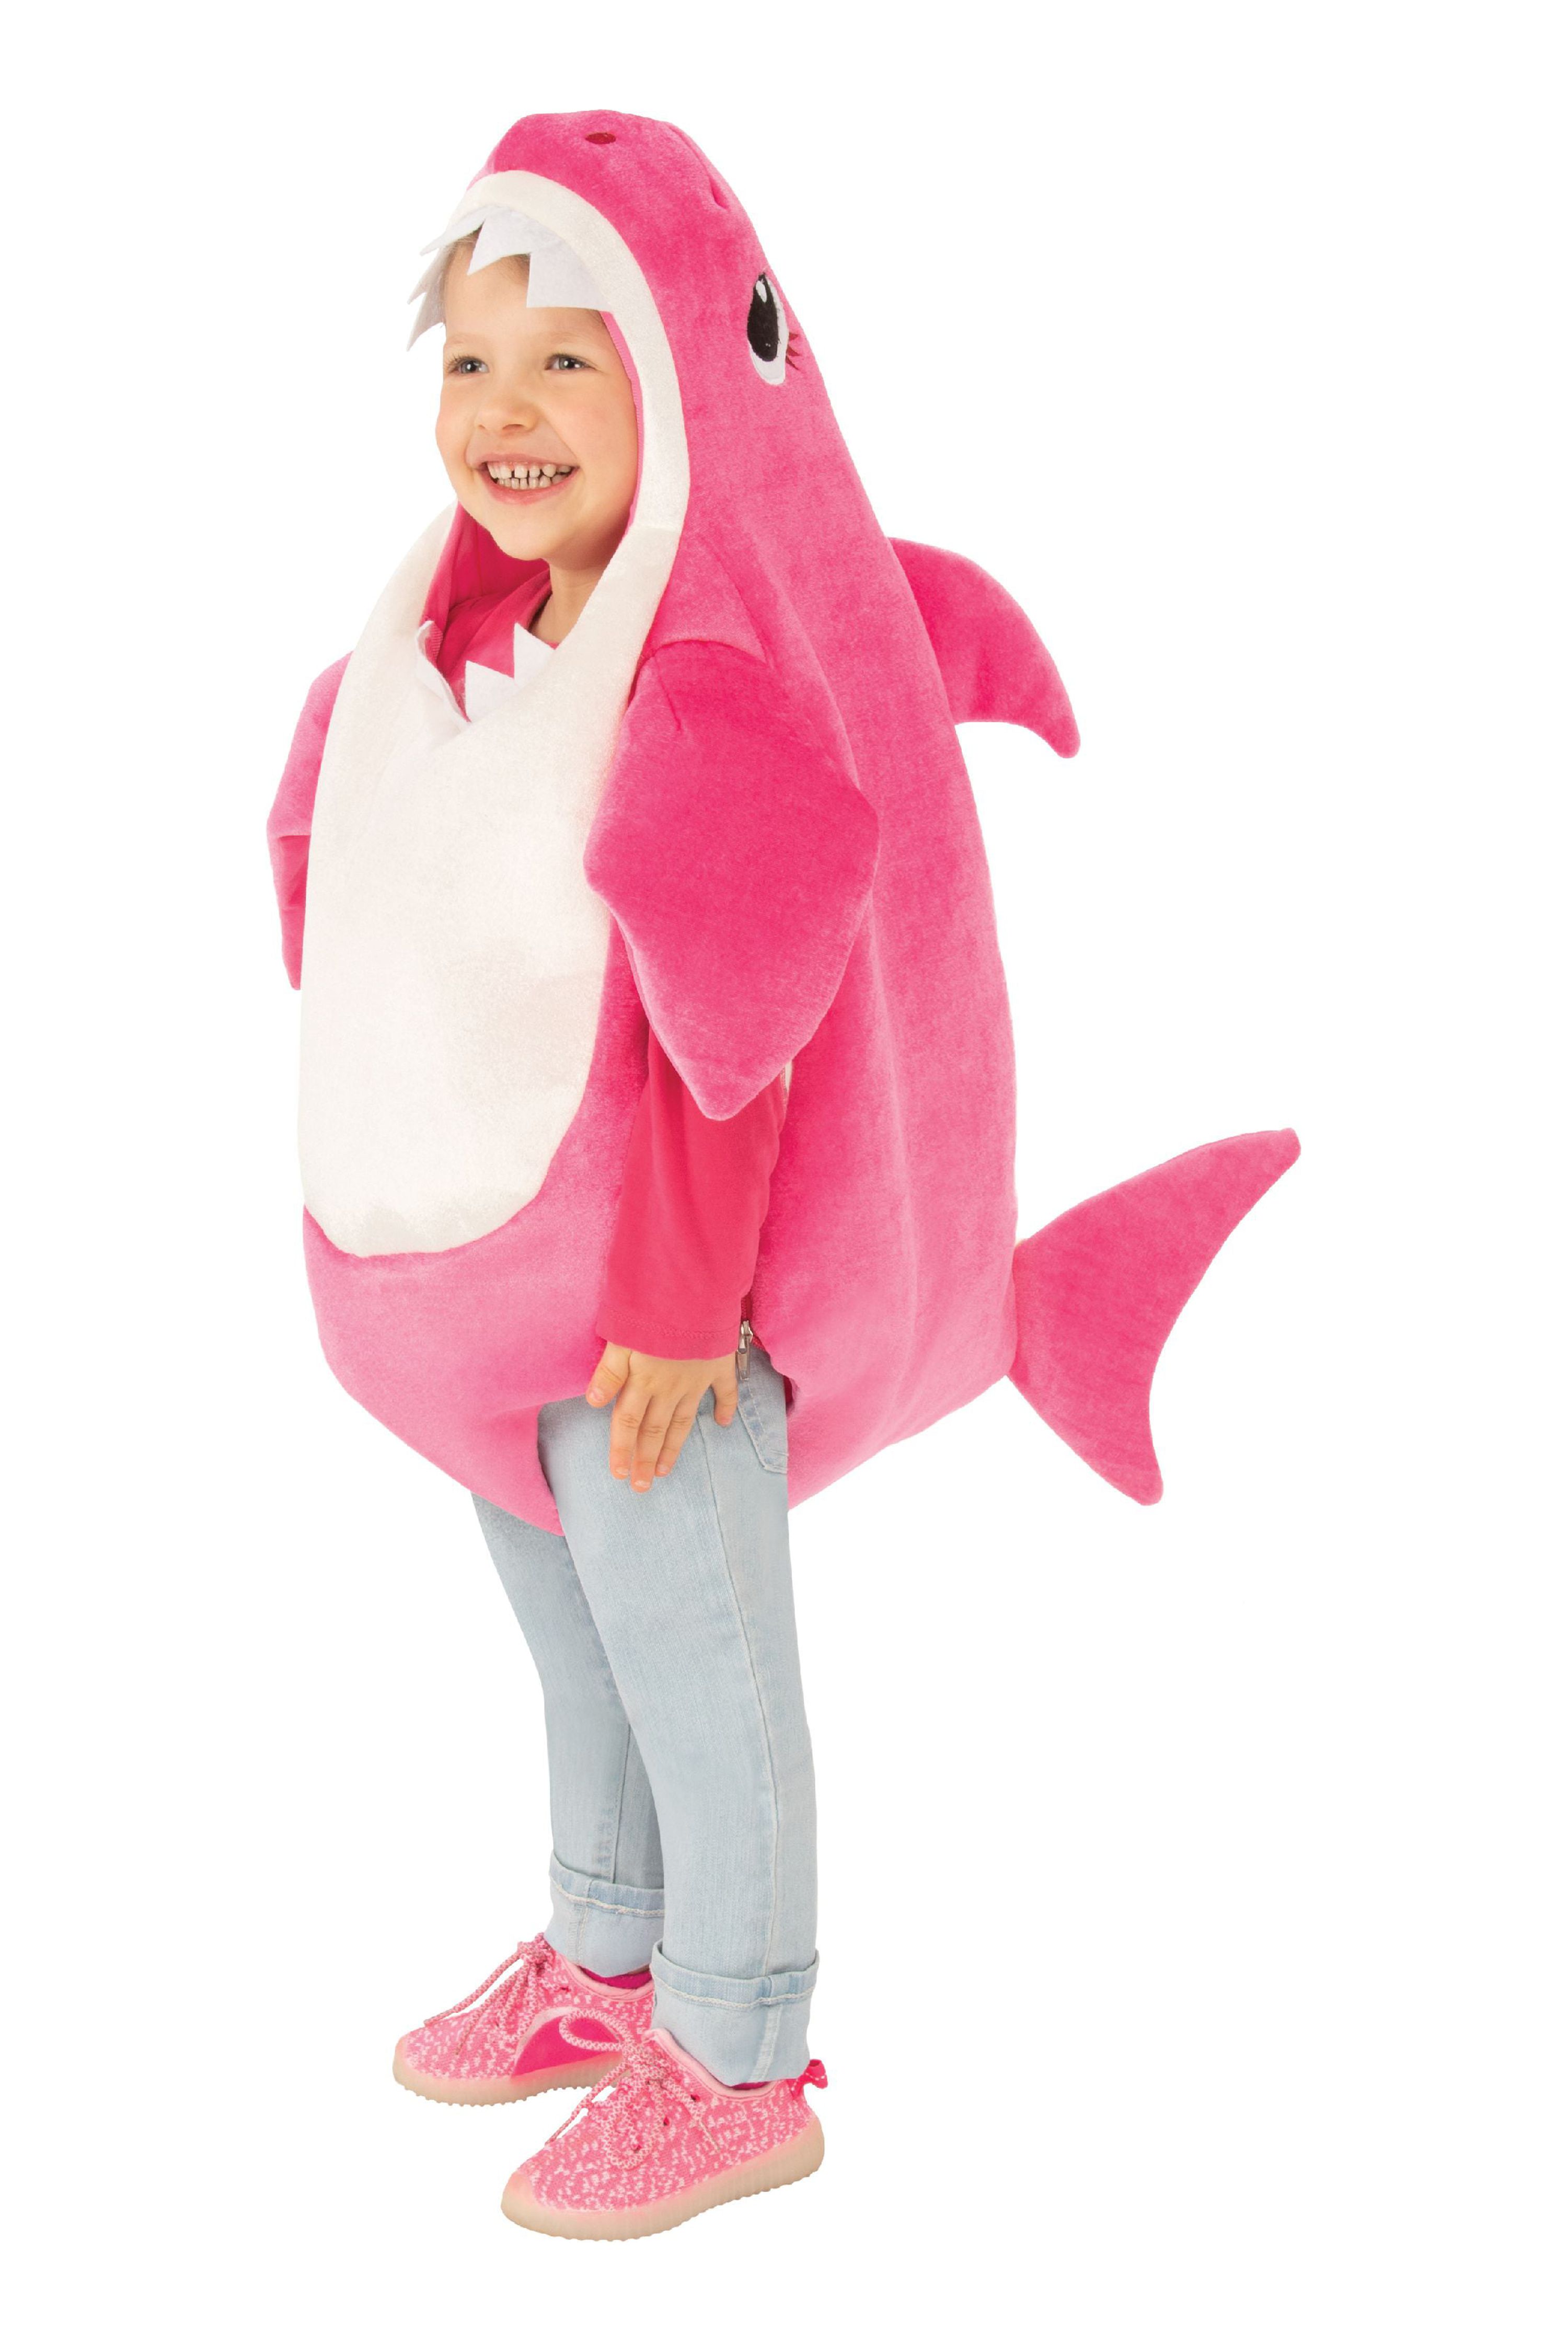 Rubies Costume Company Mommy Shark Pink Child Halloween Costume - image 1 of 1